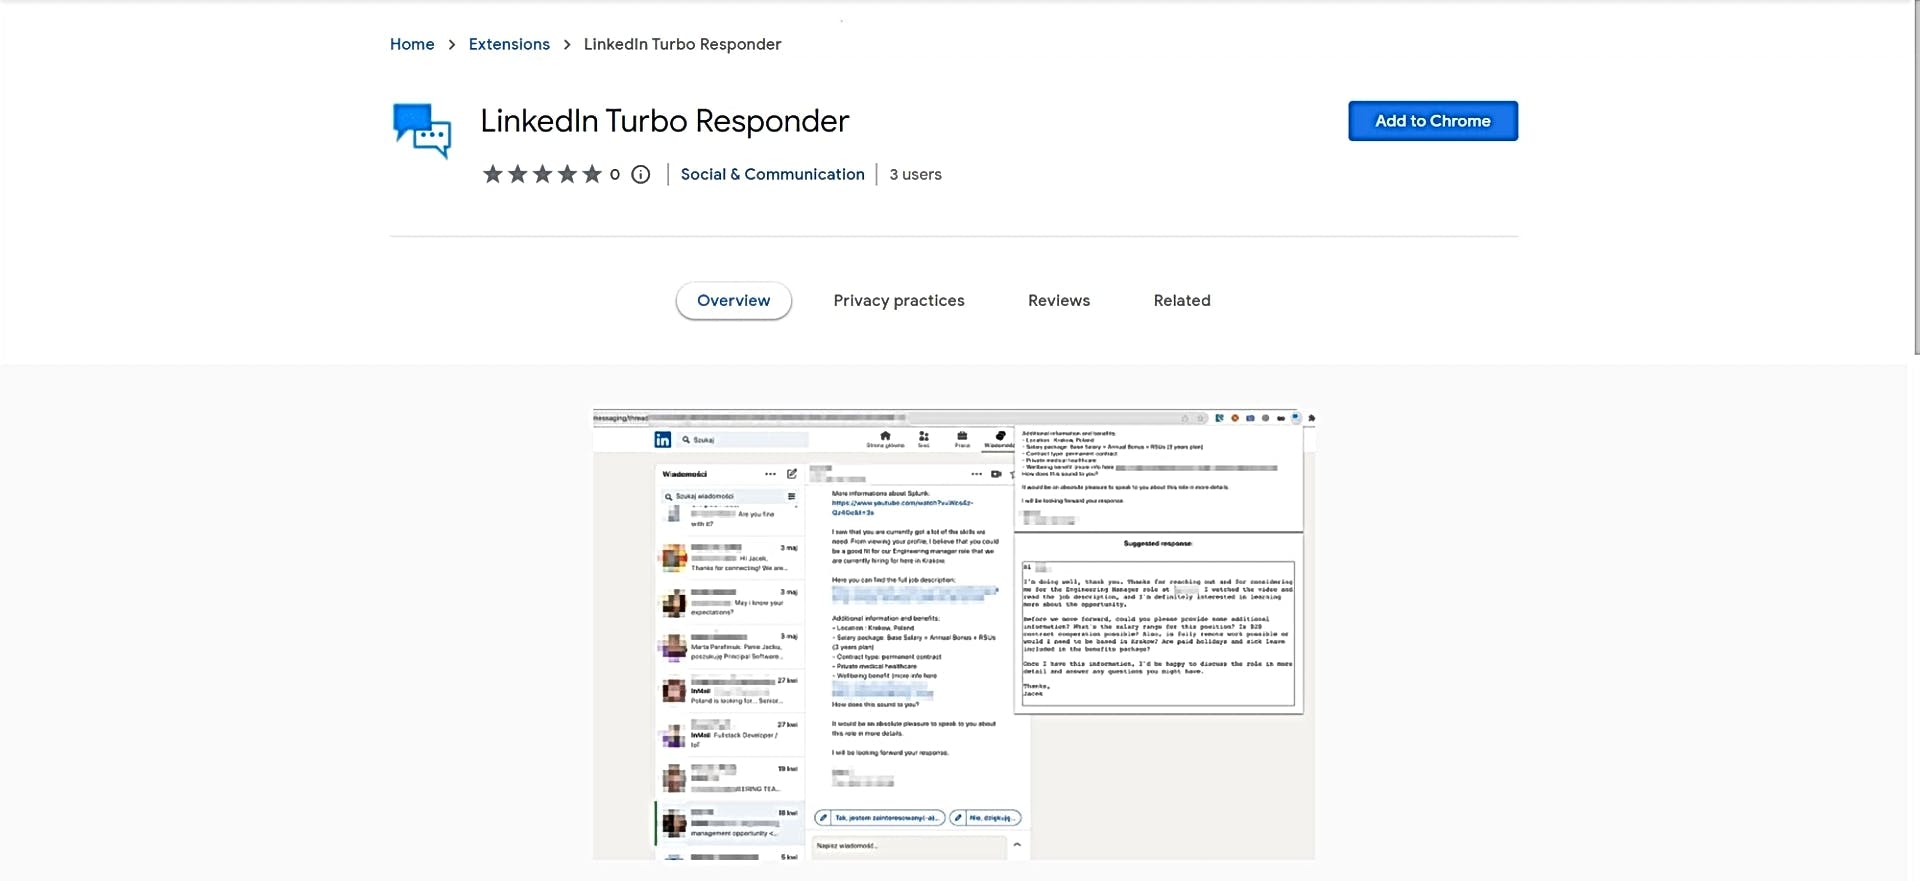 LinkedIn Turbo Responder featured